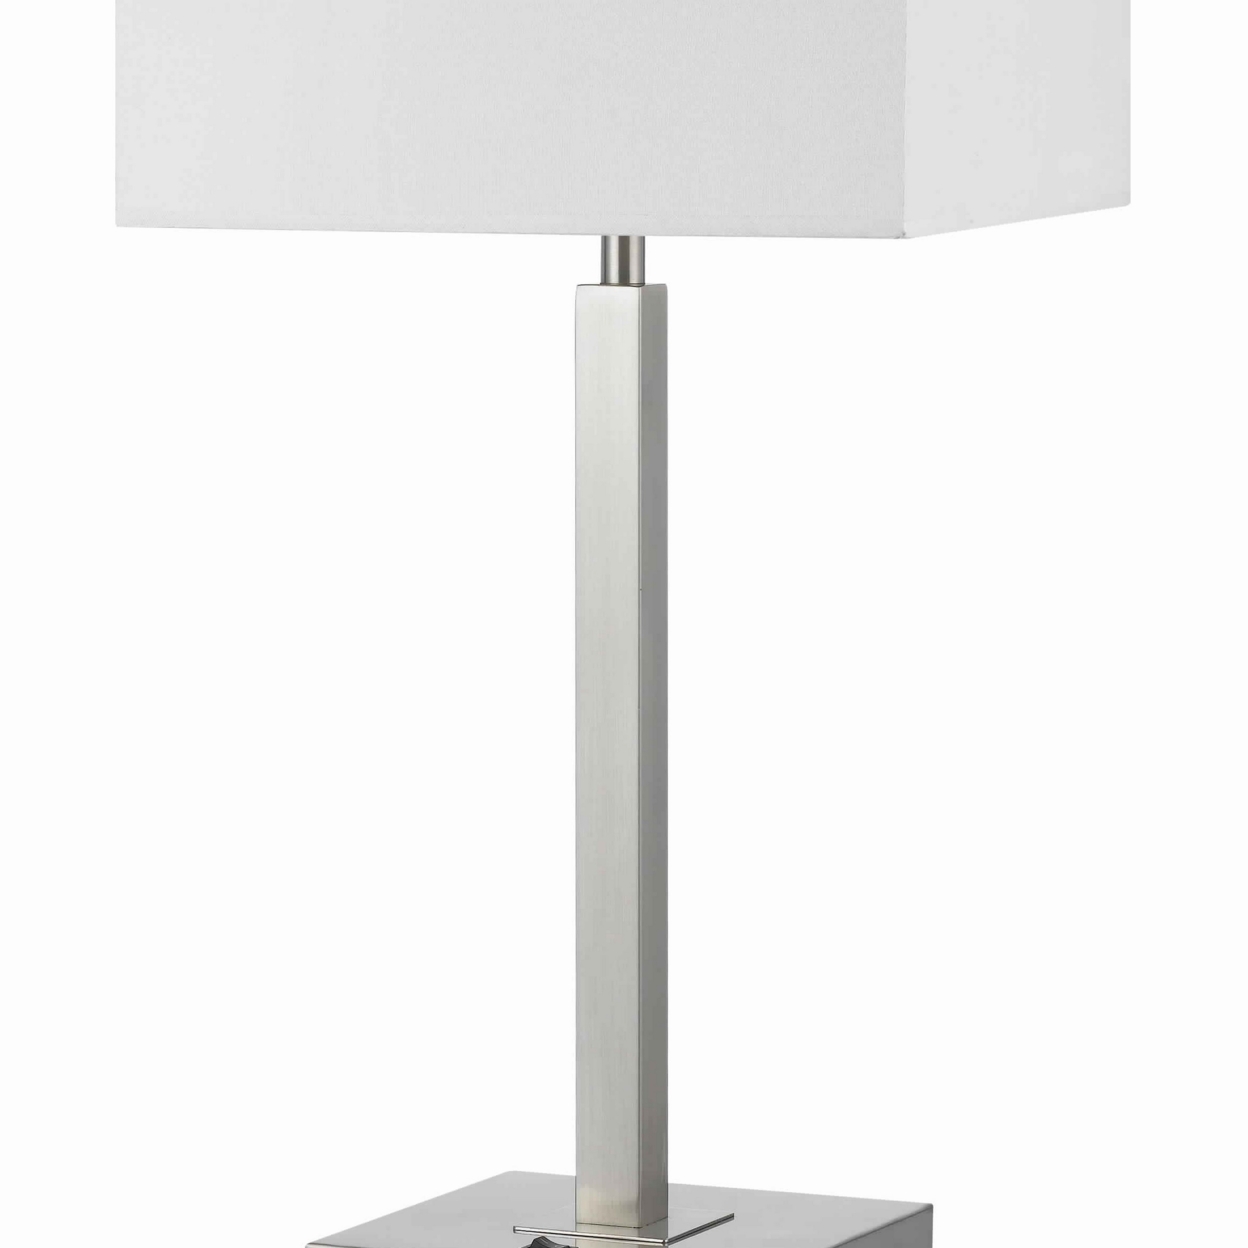 Rectangular Metal Table Lamp With Tubular Base And 2 Power Outlet, White- Saltoro Sherpi